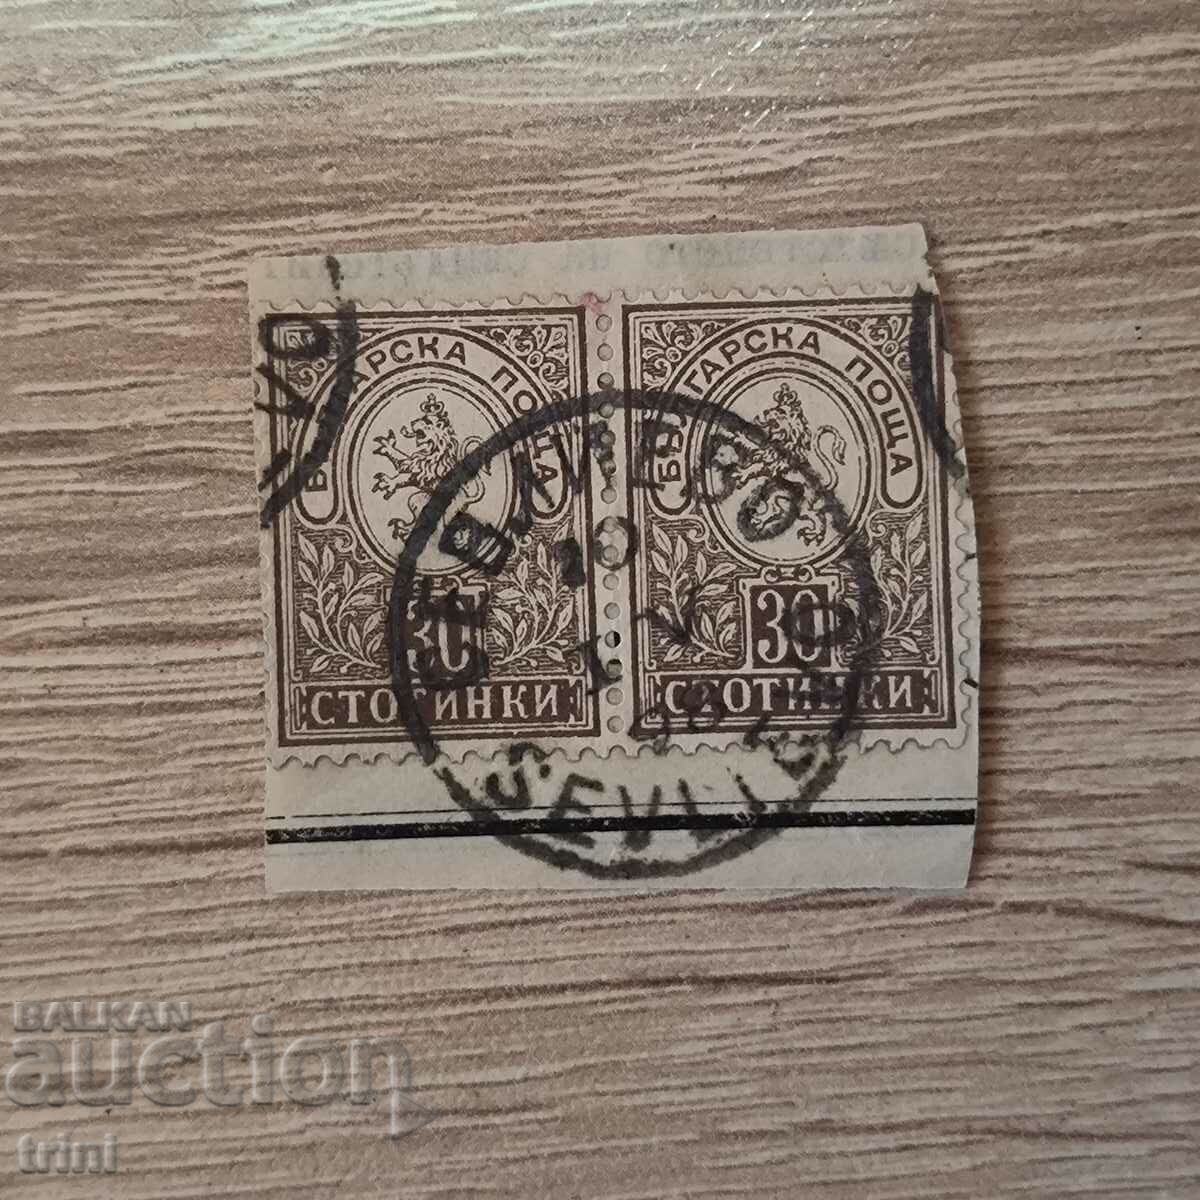 Bulgaria Small lion 1889 2 x 30 cents γραμματόσημο Sevlievo